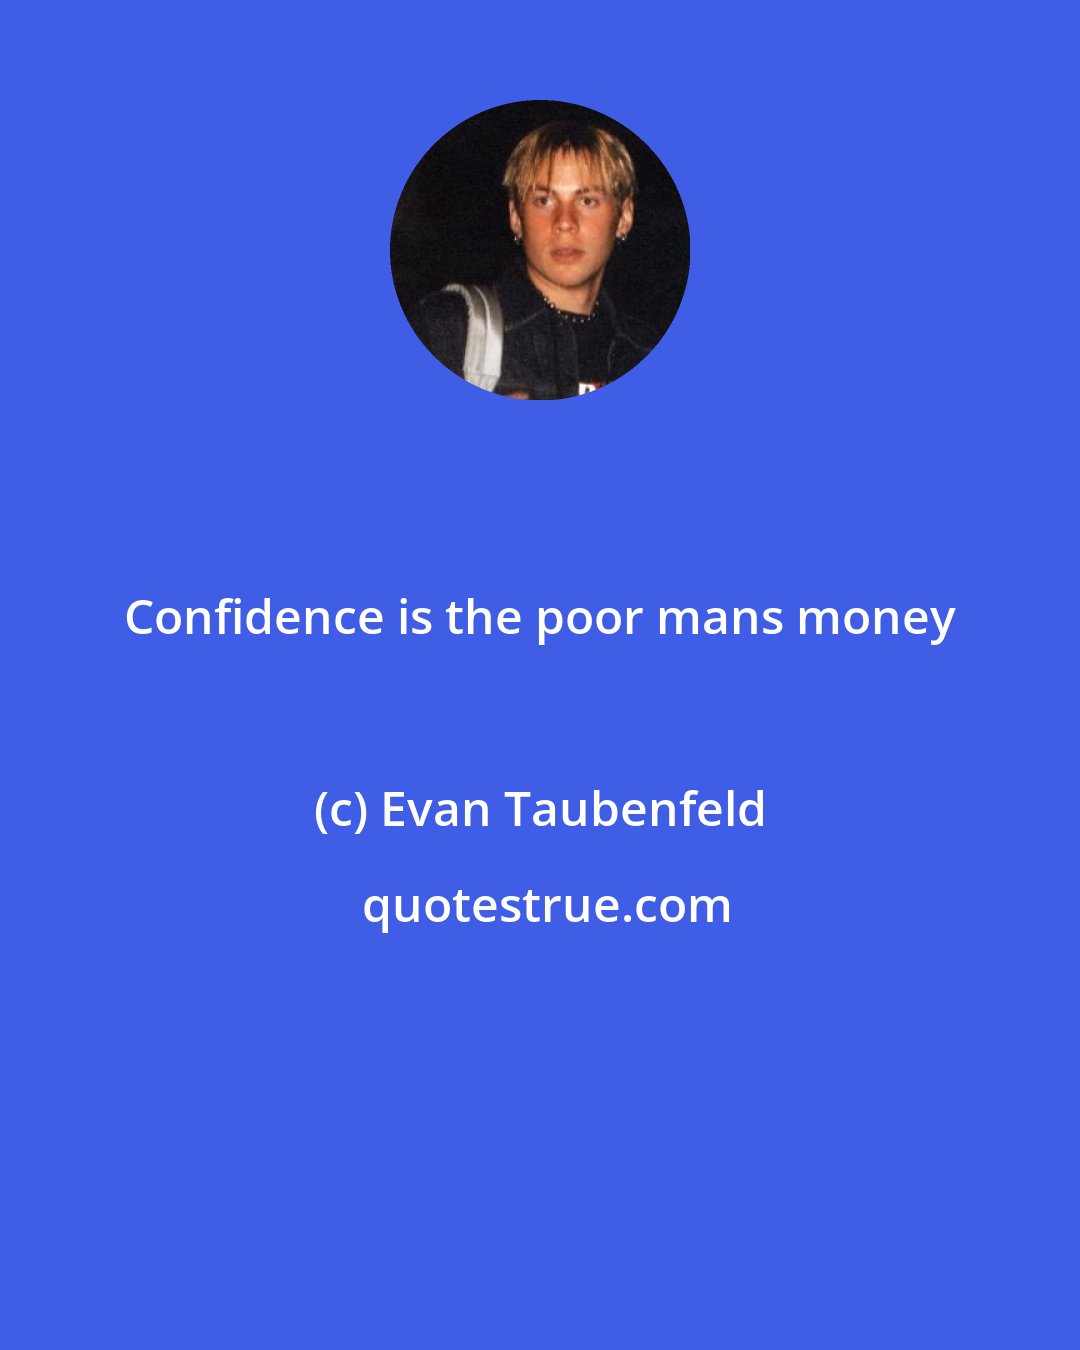 Evan Taubenfeld: Confidence is the poor mans money